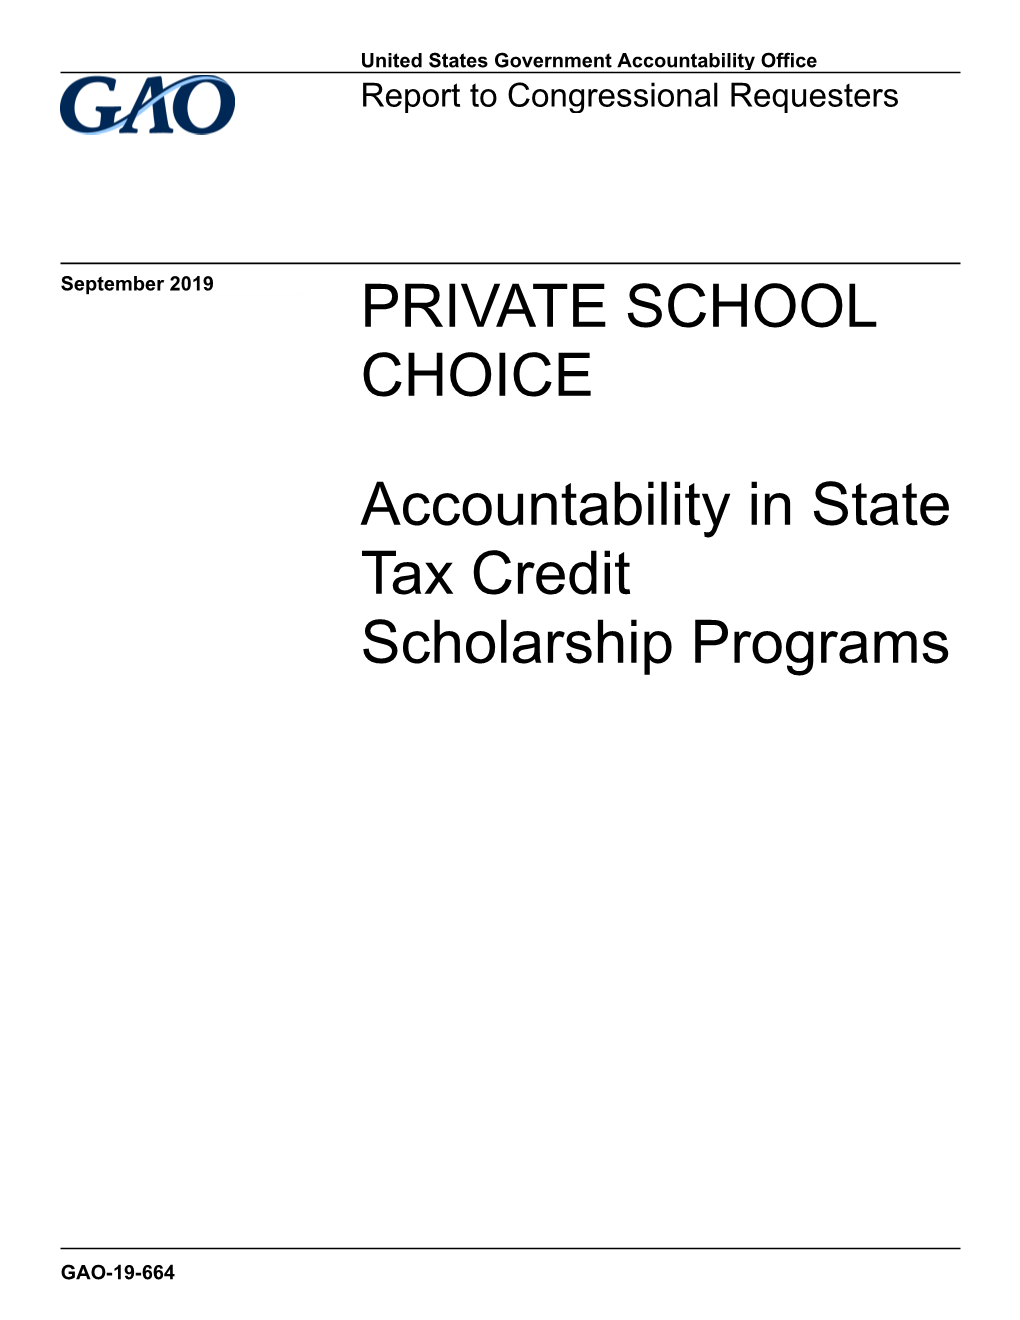 GAO-19-664, PRIVATE SCHOOL CHOICE: Accountability in State